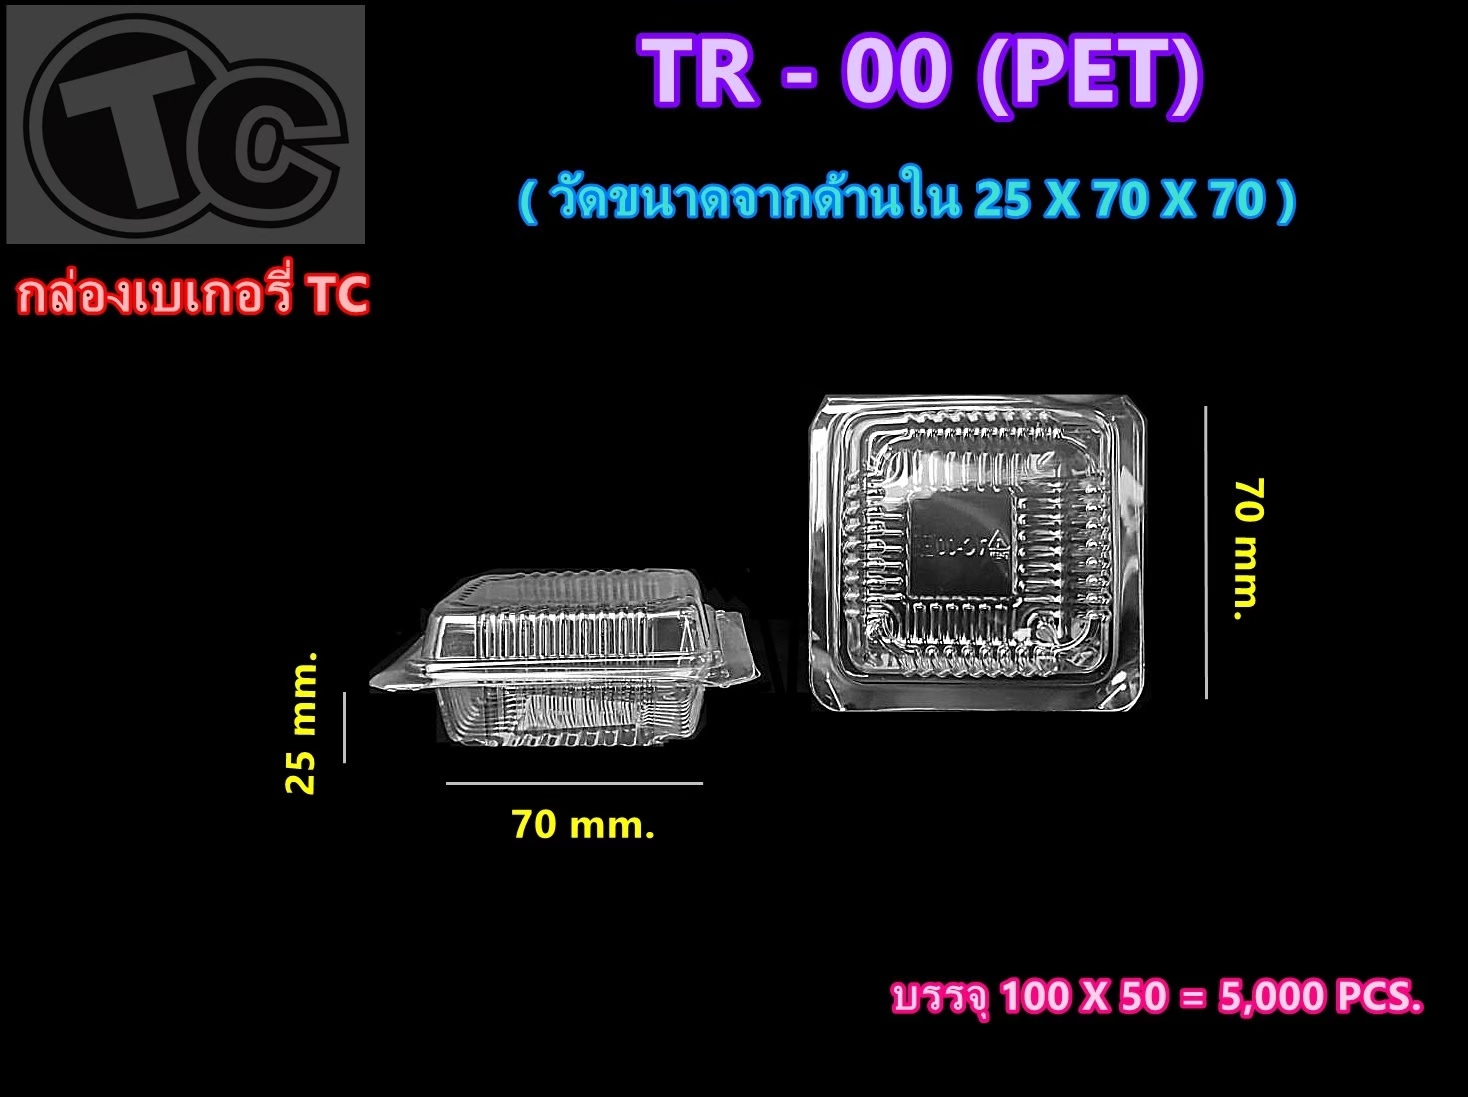 TR-00 PET กล่องเค้กพลาสติกTR-00 กล่องพลาสติกใส กล่องใส กล่องขนม ใส่ของว่าง